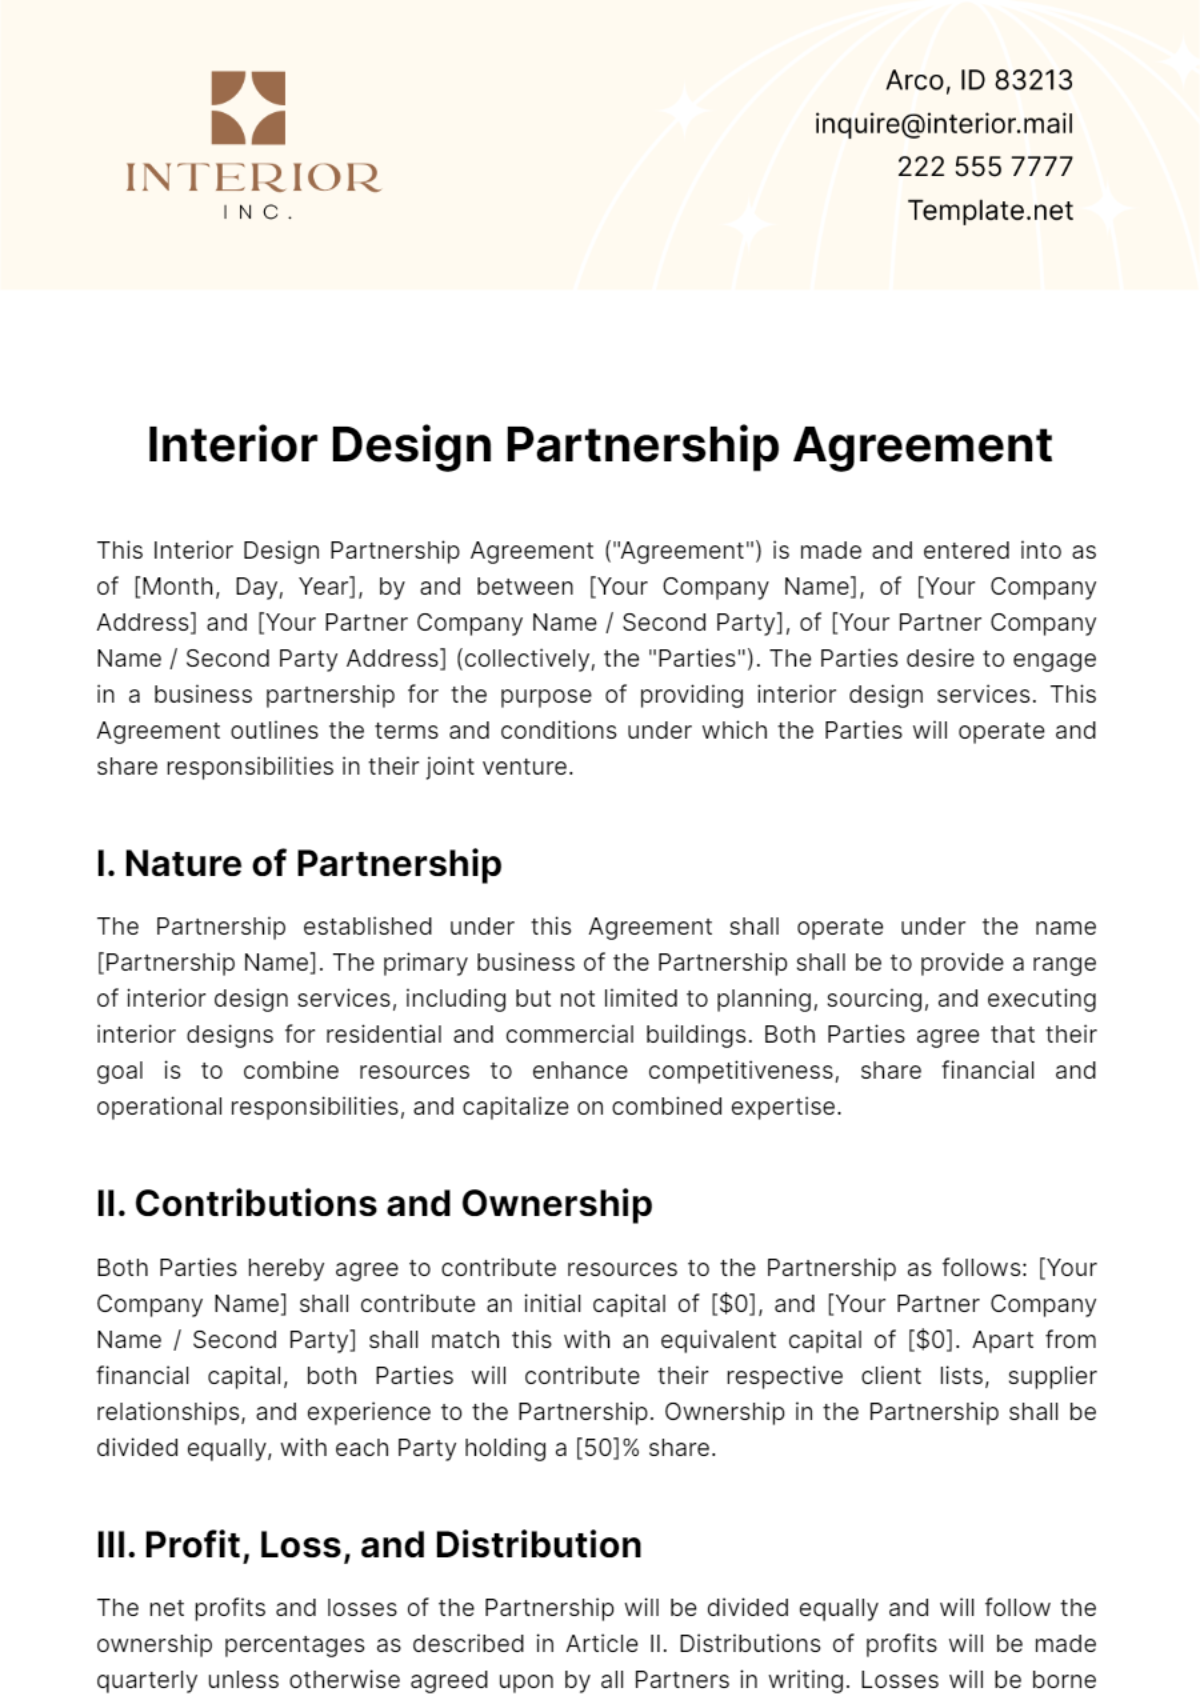 Interior Design Partnership Agreement Template